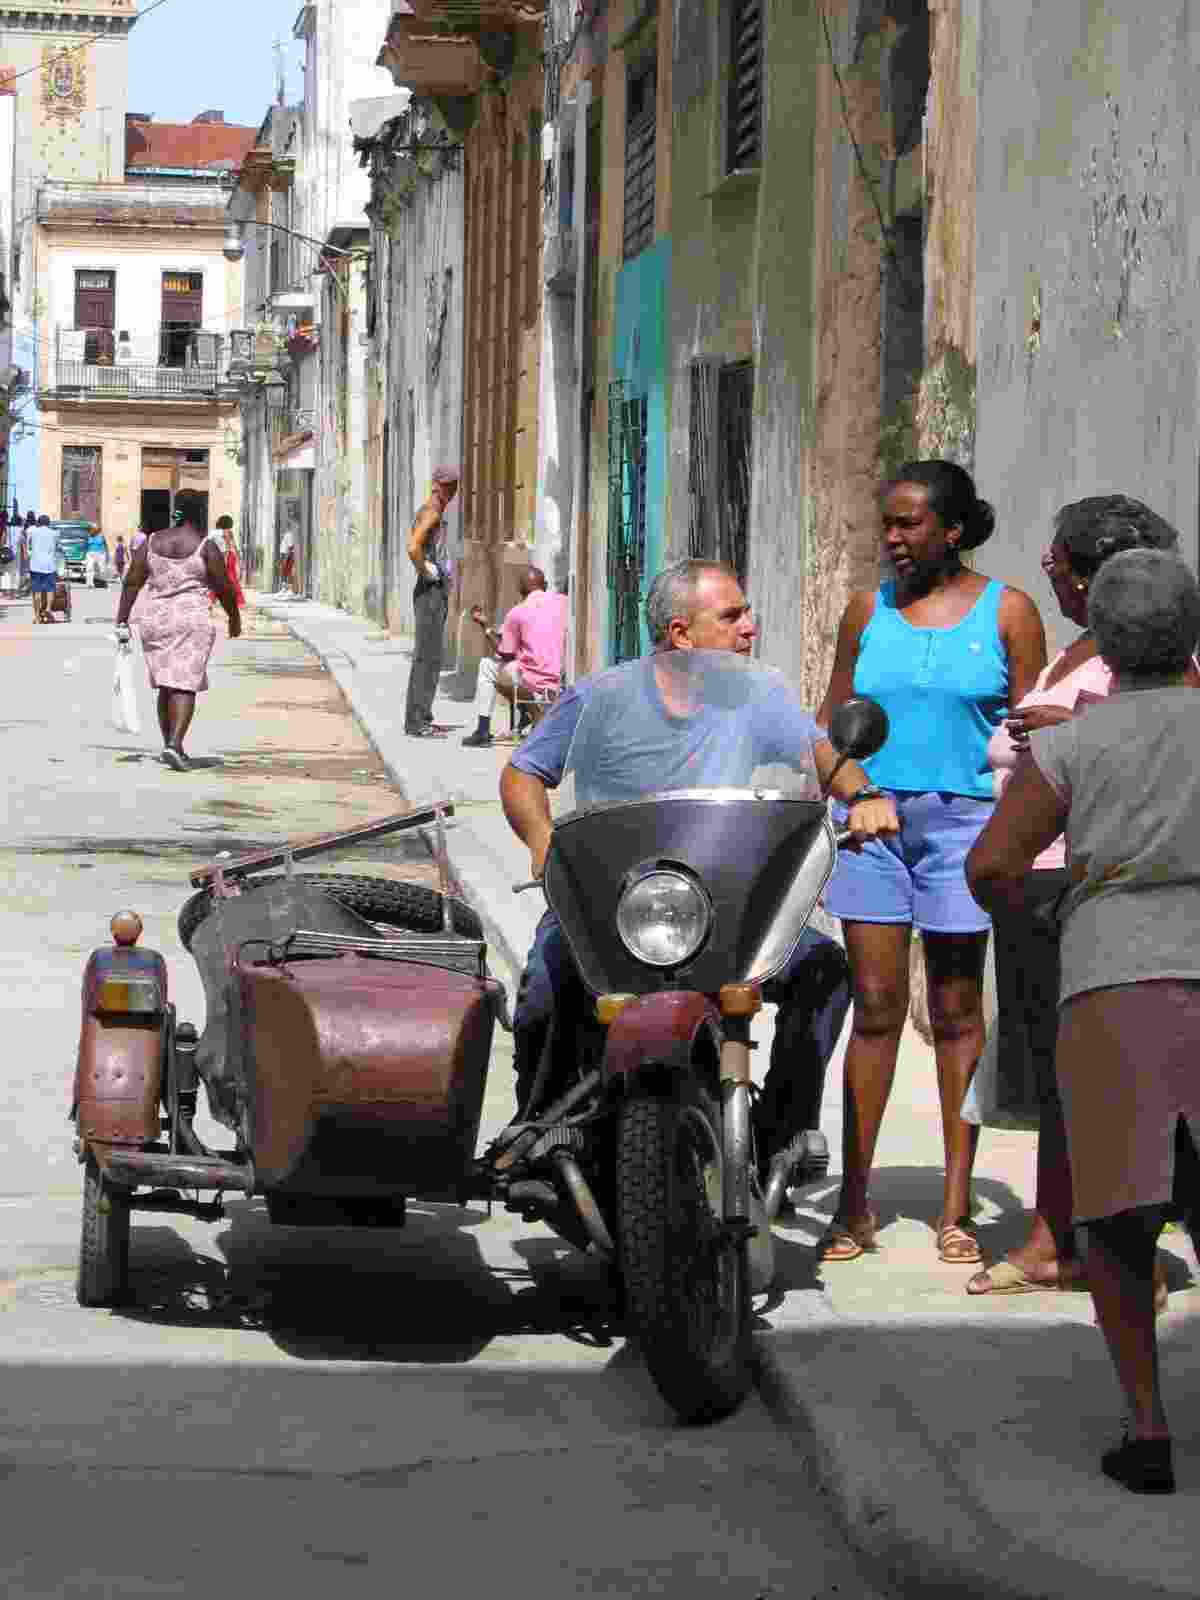 Cuban street scene